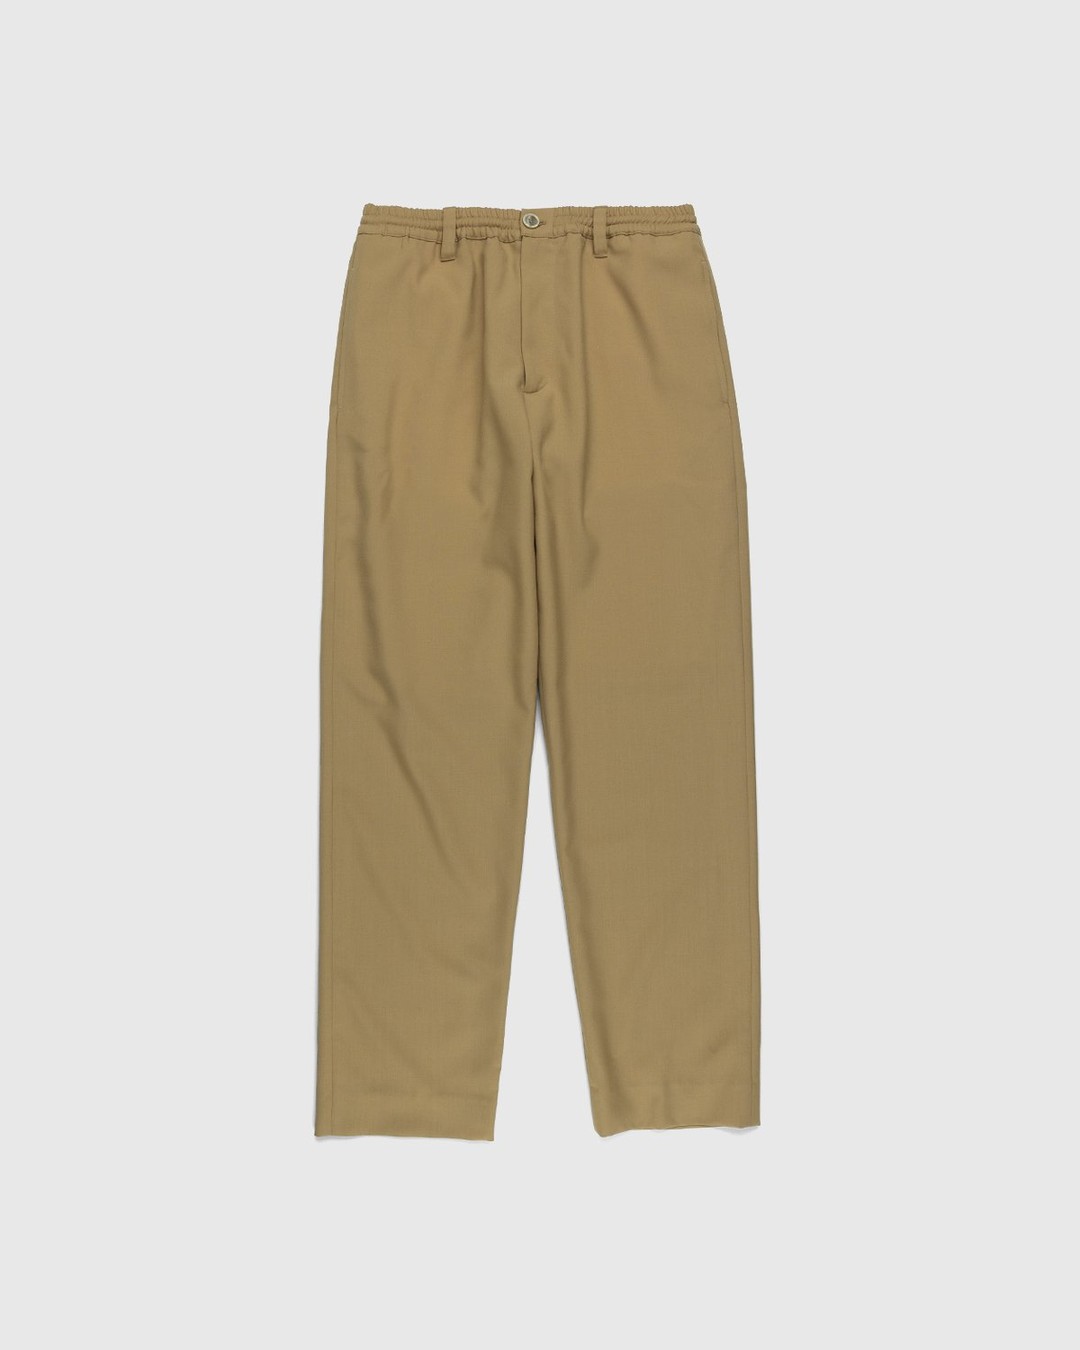 Marni – Tropical Wool Trousers Dijon - Trousers - Brown - Image 1